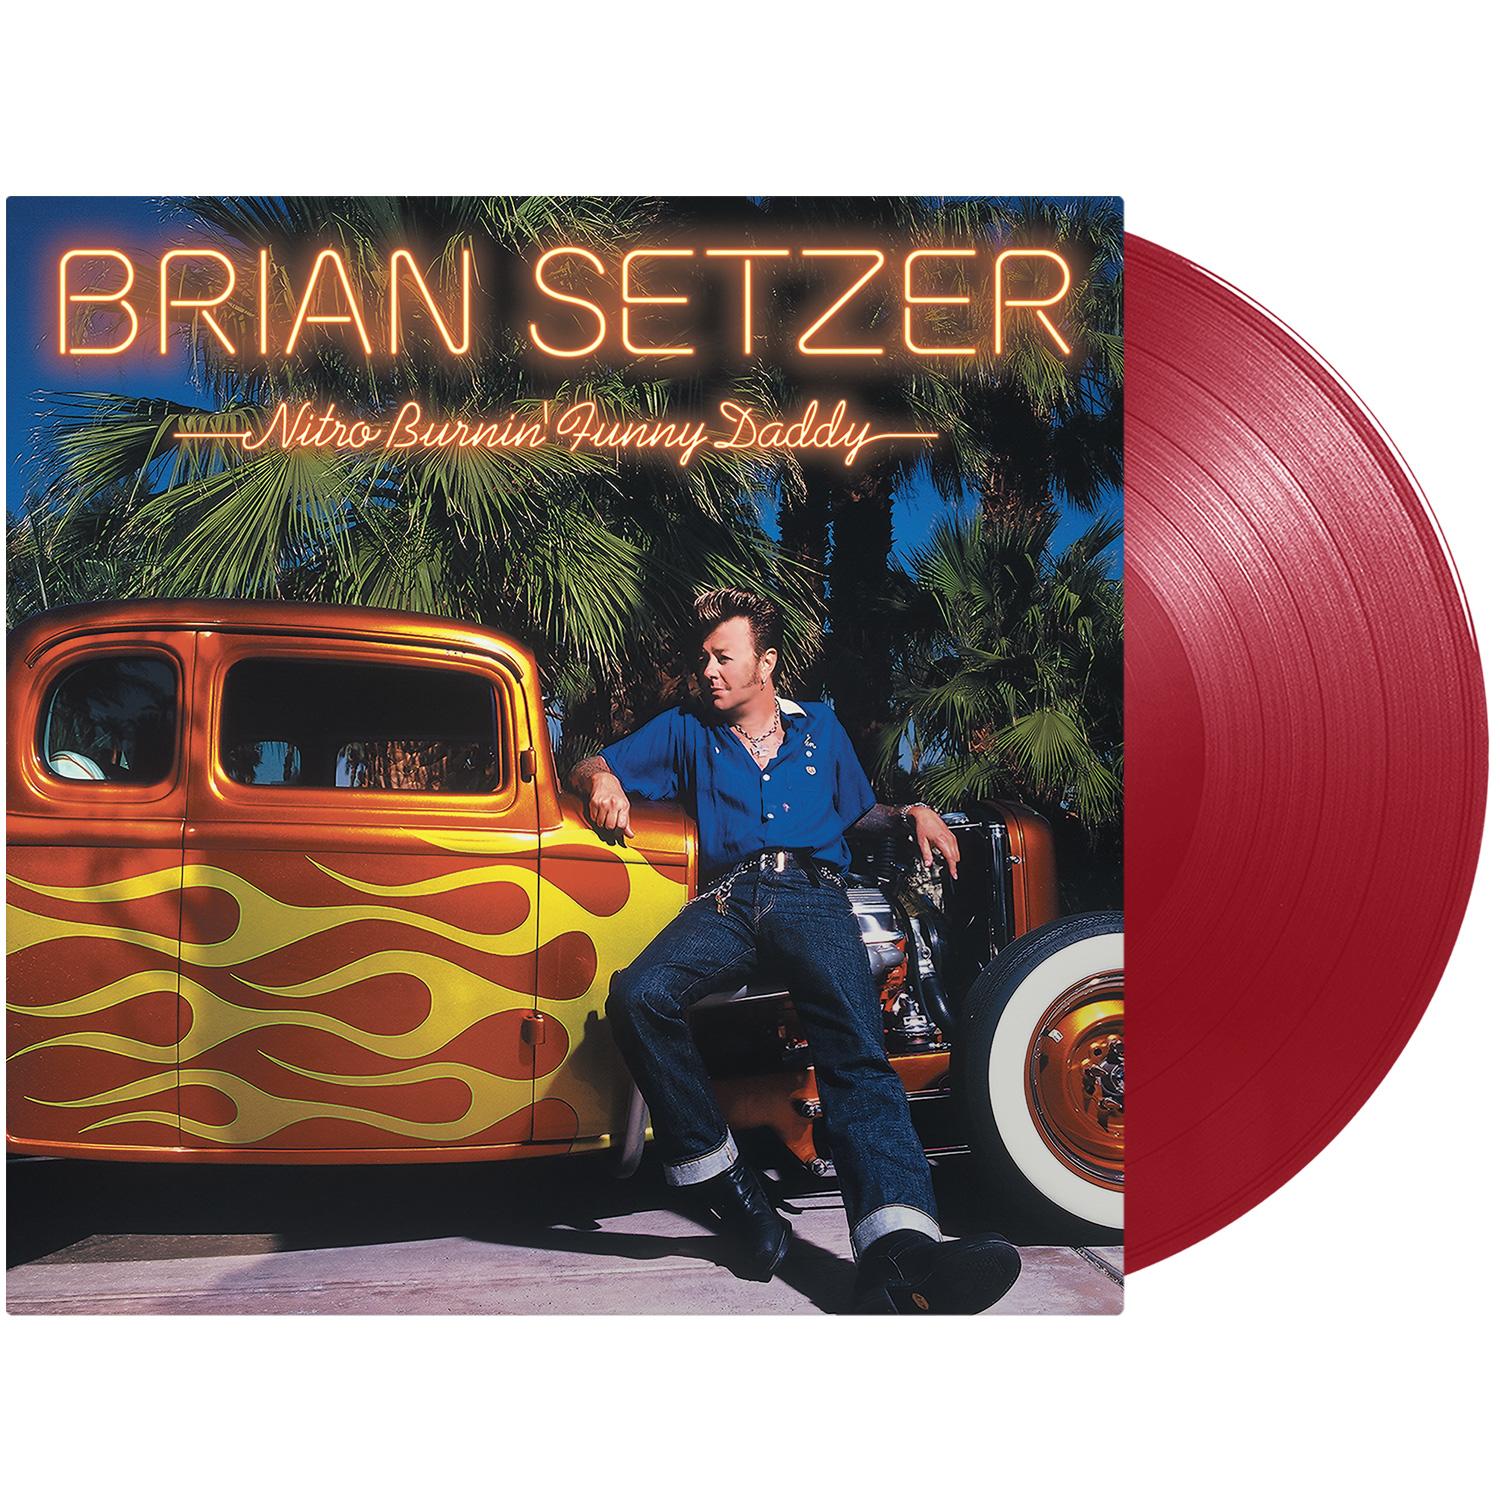 BRIAN SETZER - Nitro Burnin' Funny Daddy - LP - 180g Transparent Red Vinyl